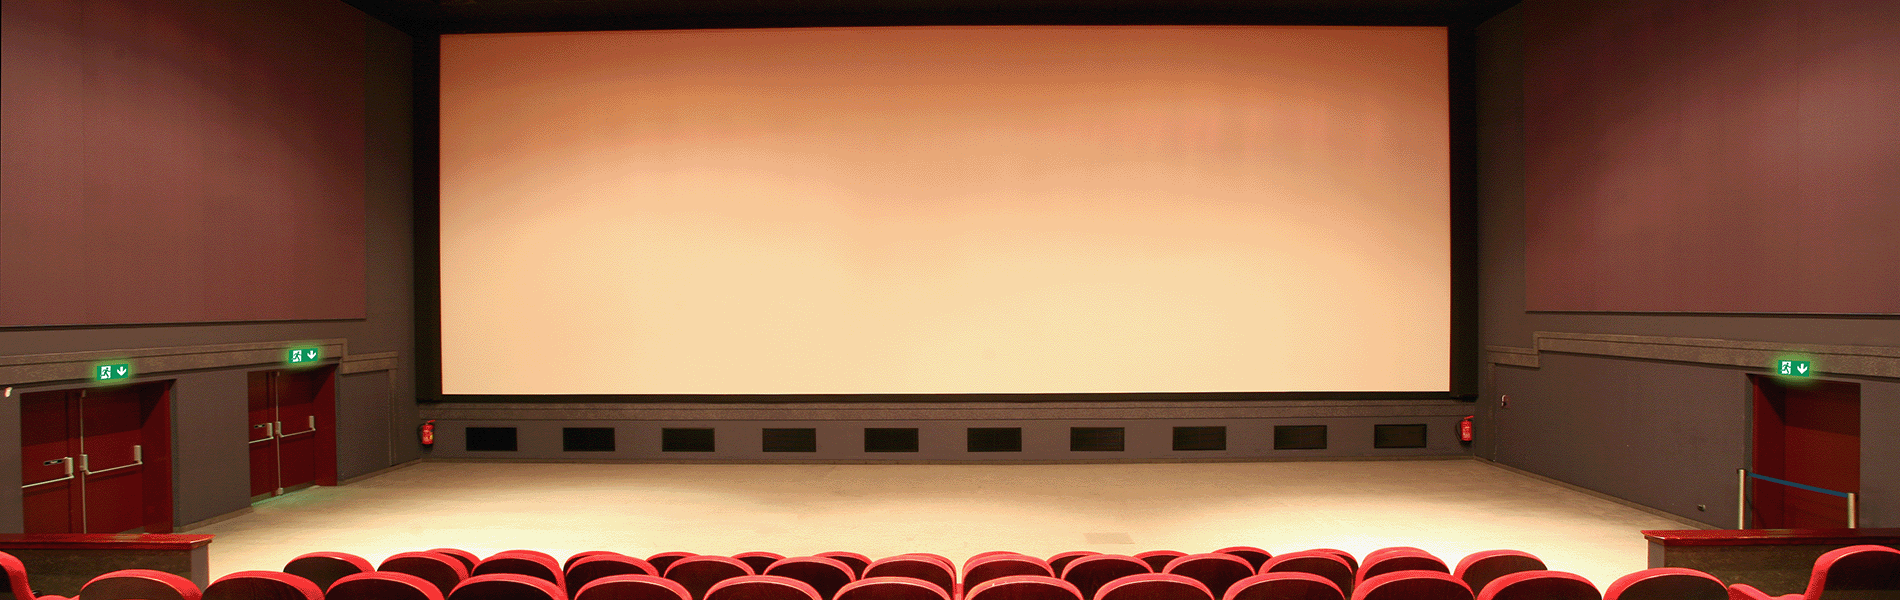 Kinosaal mit dimmbaren Leuchten